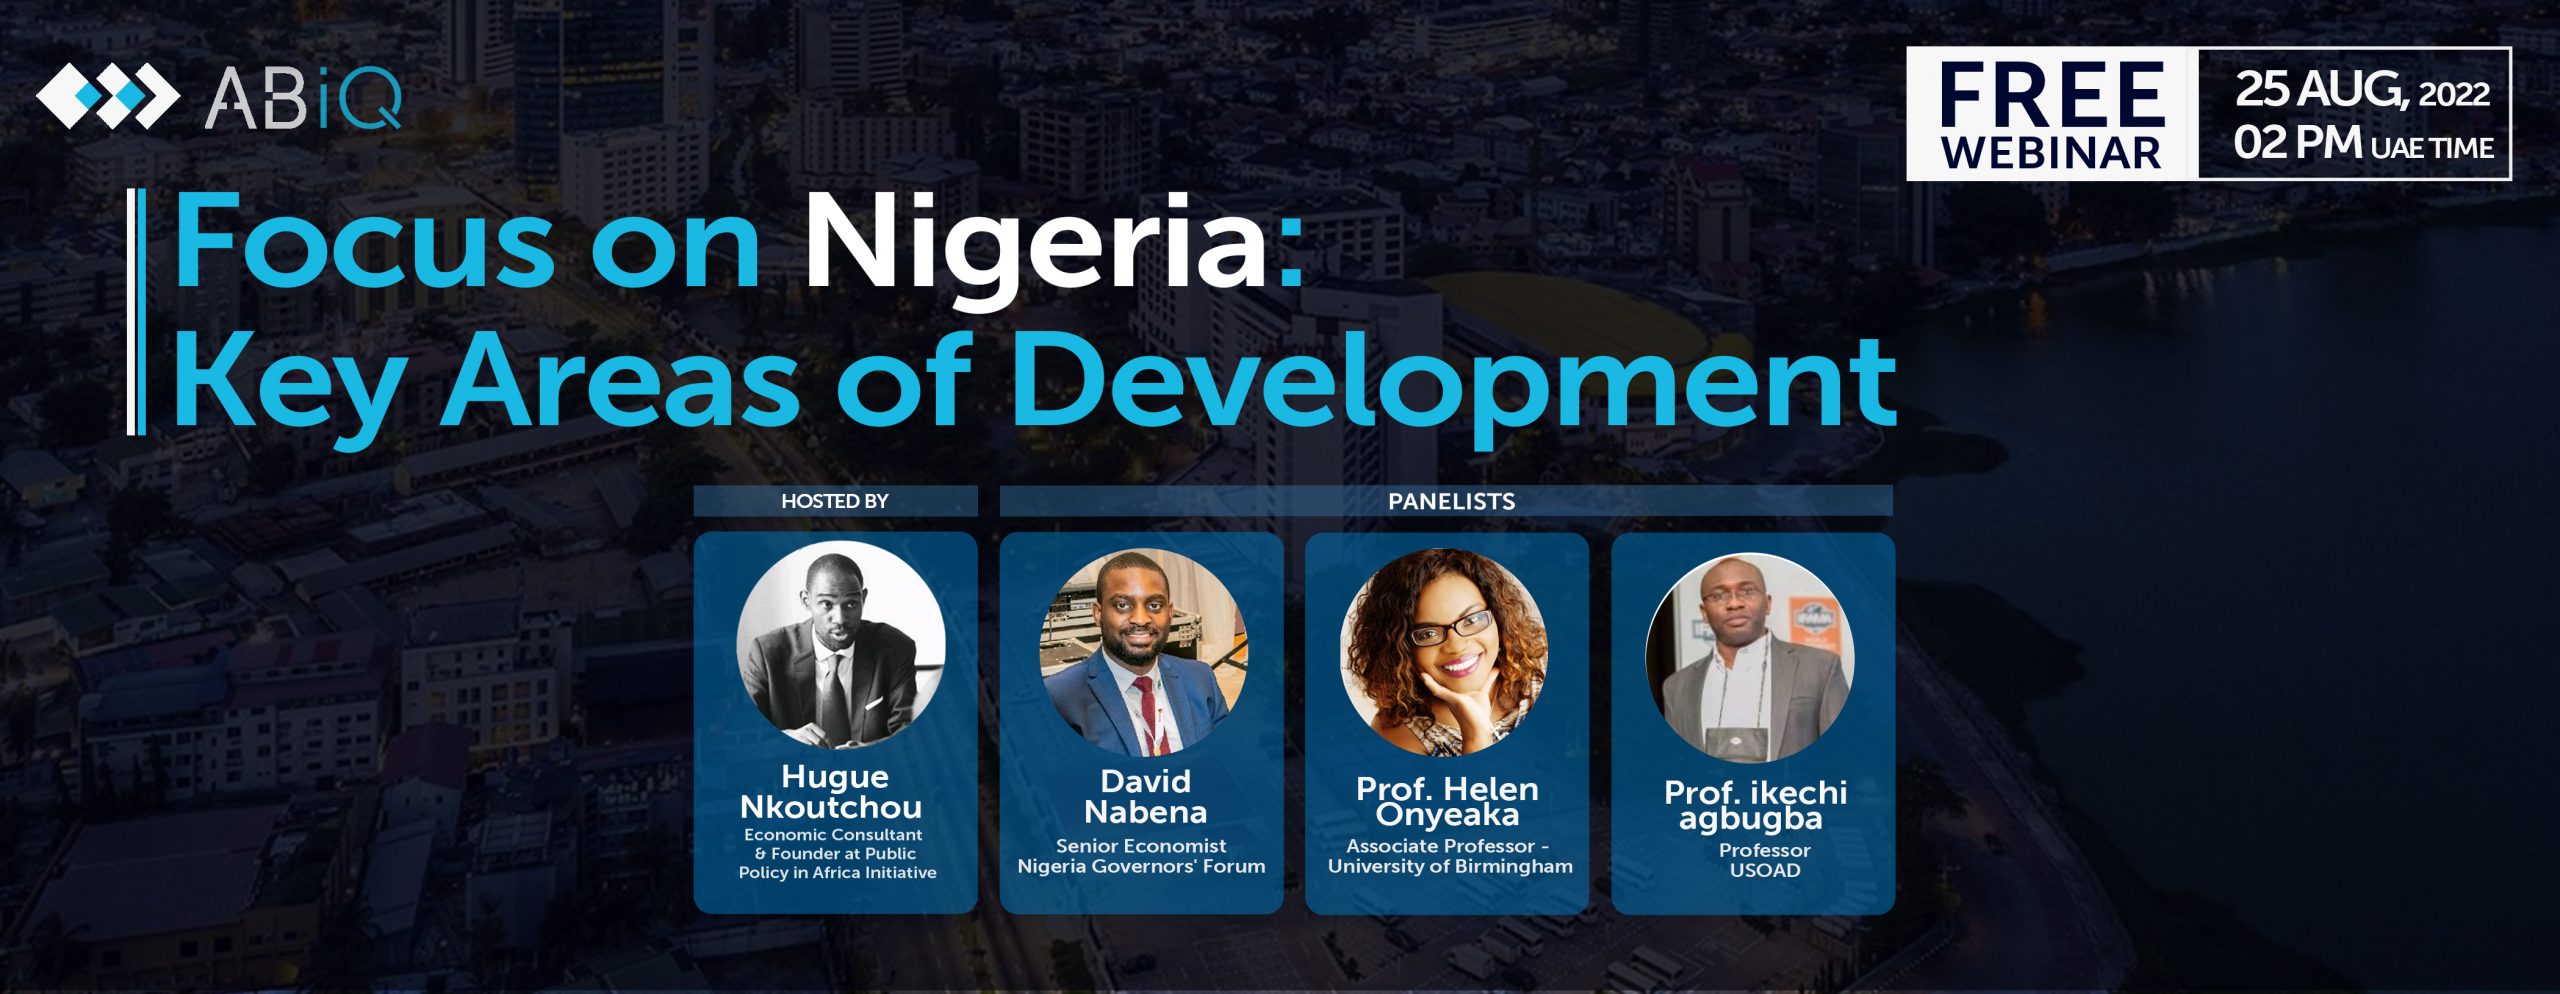 Key areas of Development in Nigeria